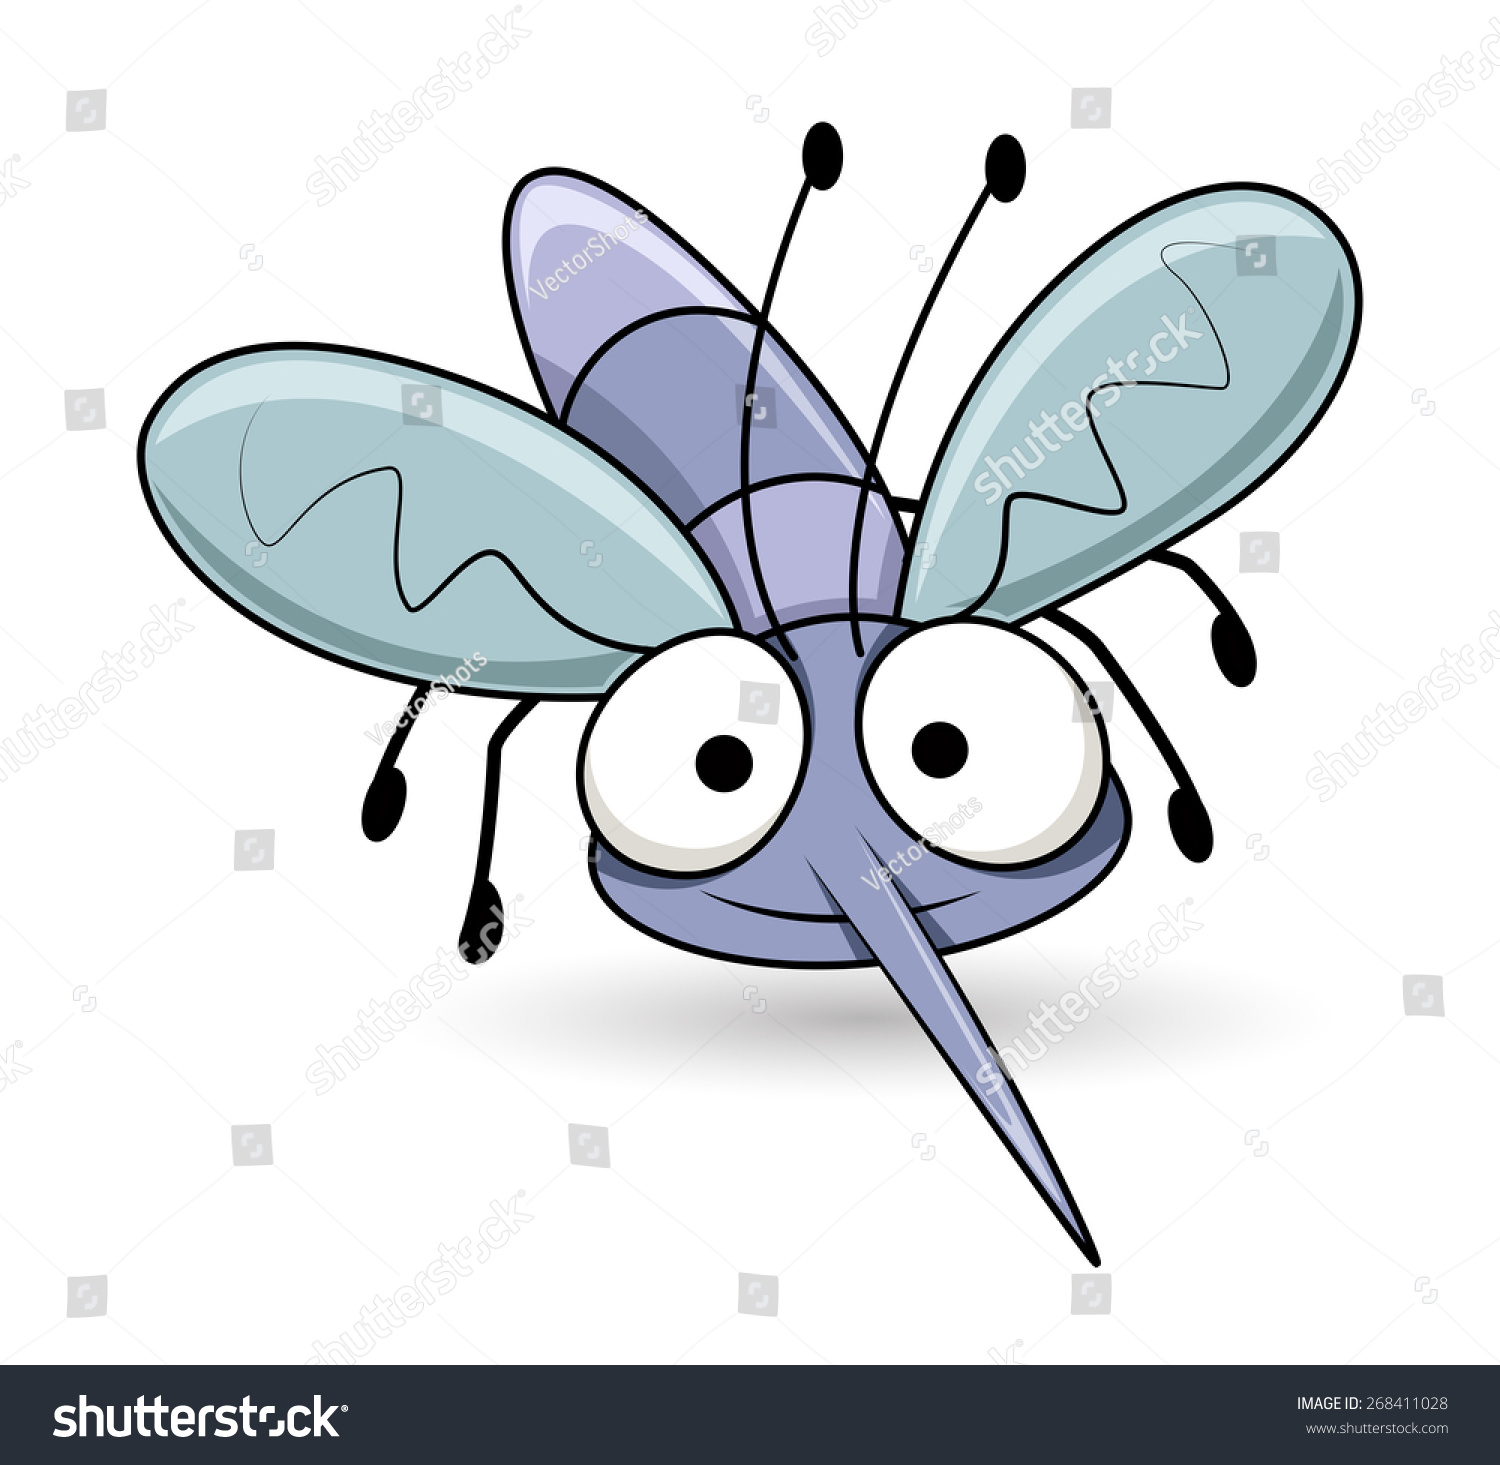 Cartoon Funny Mosquito Stock Vector 268411028 - Shutterstock